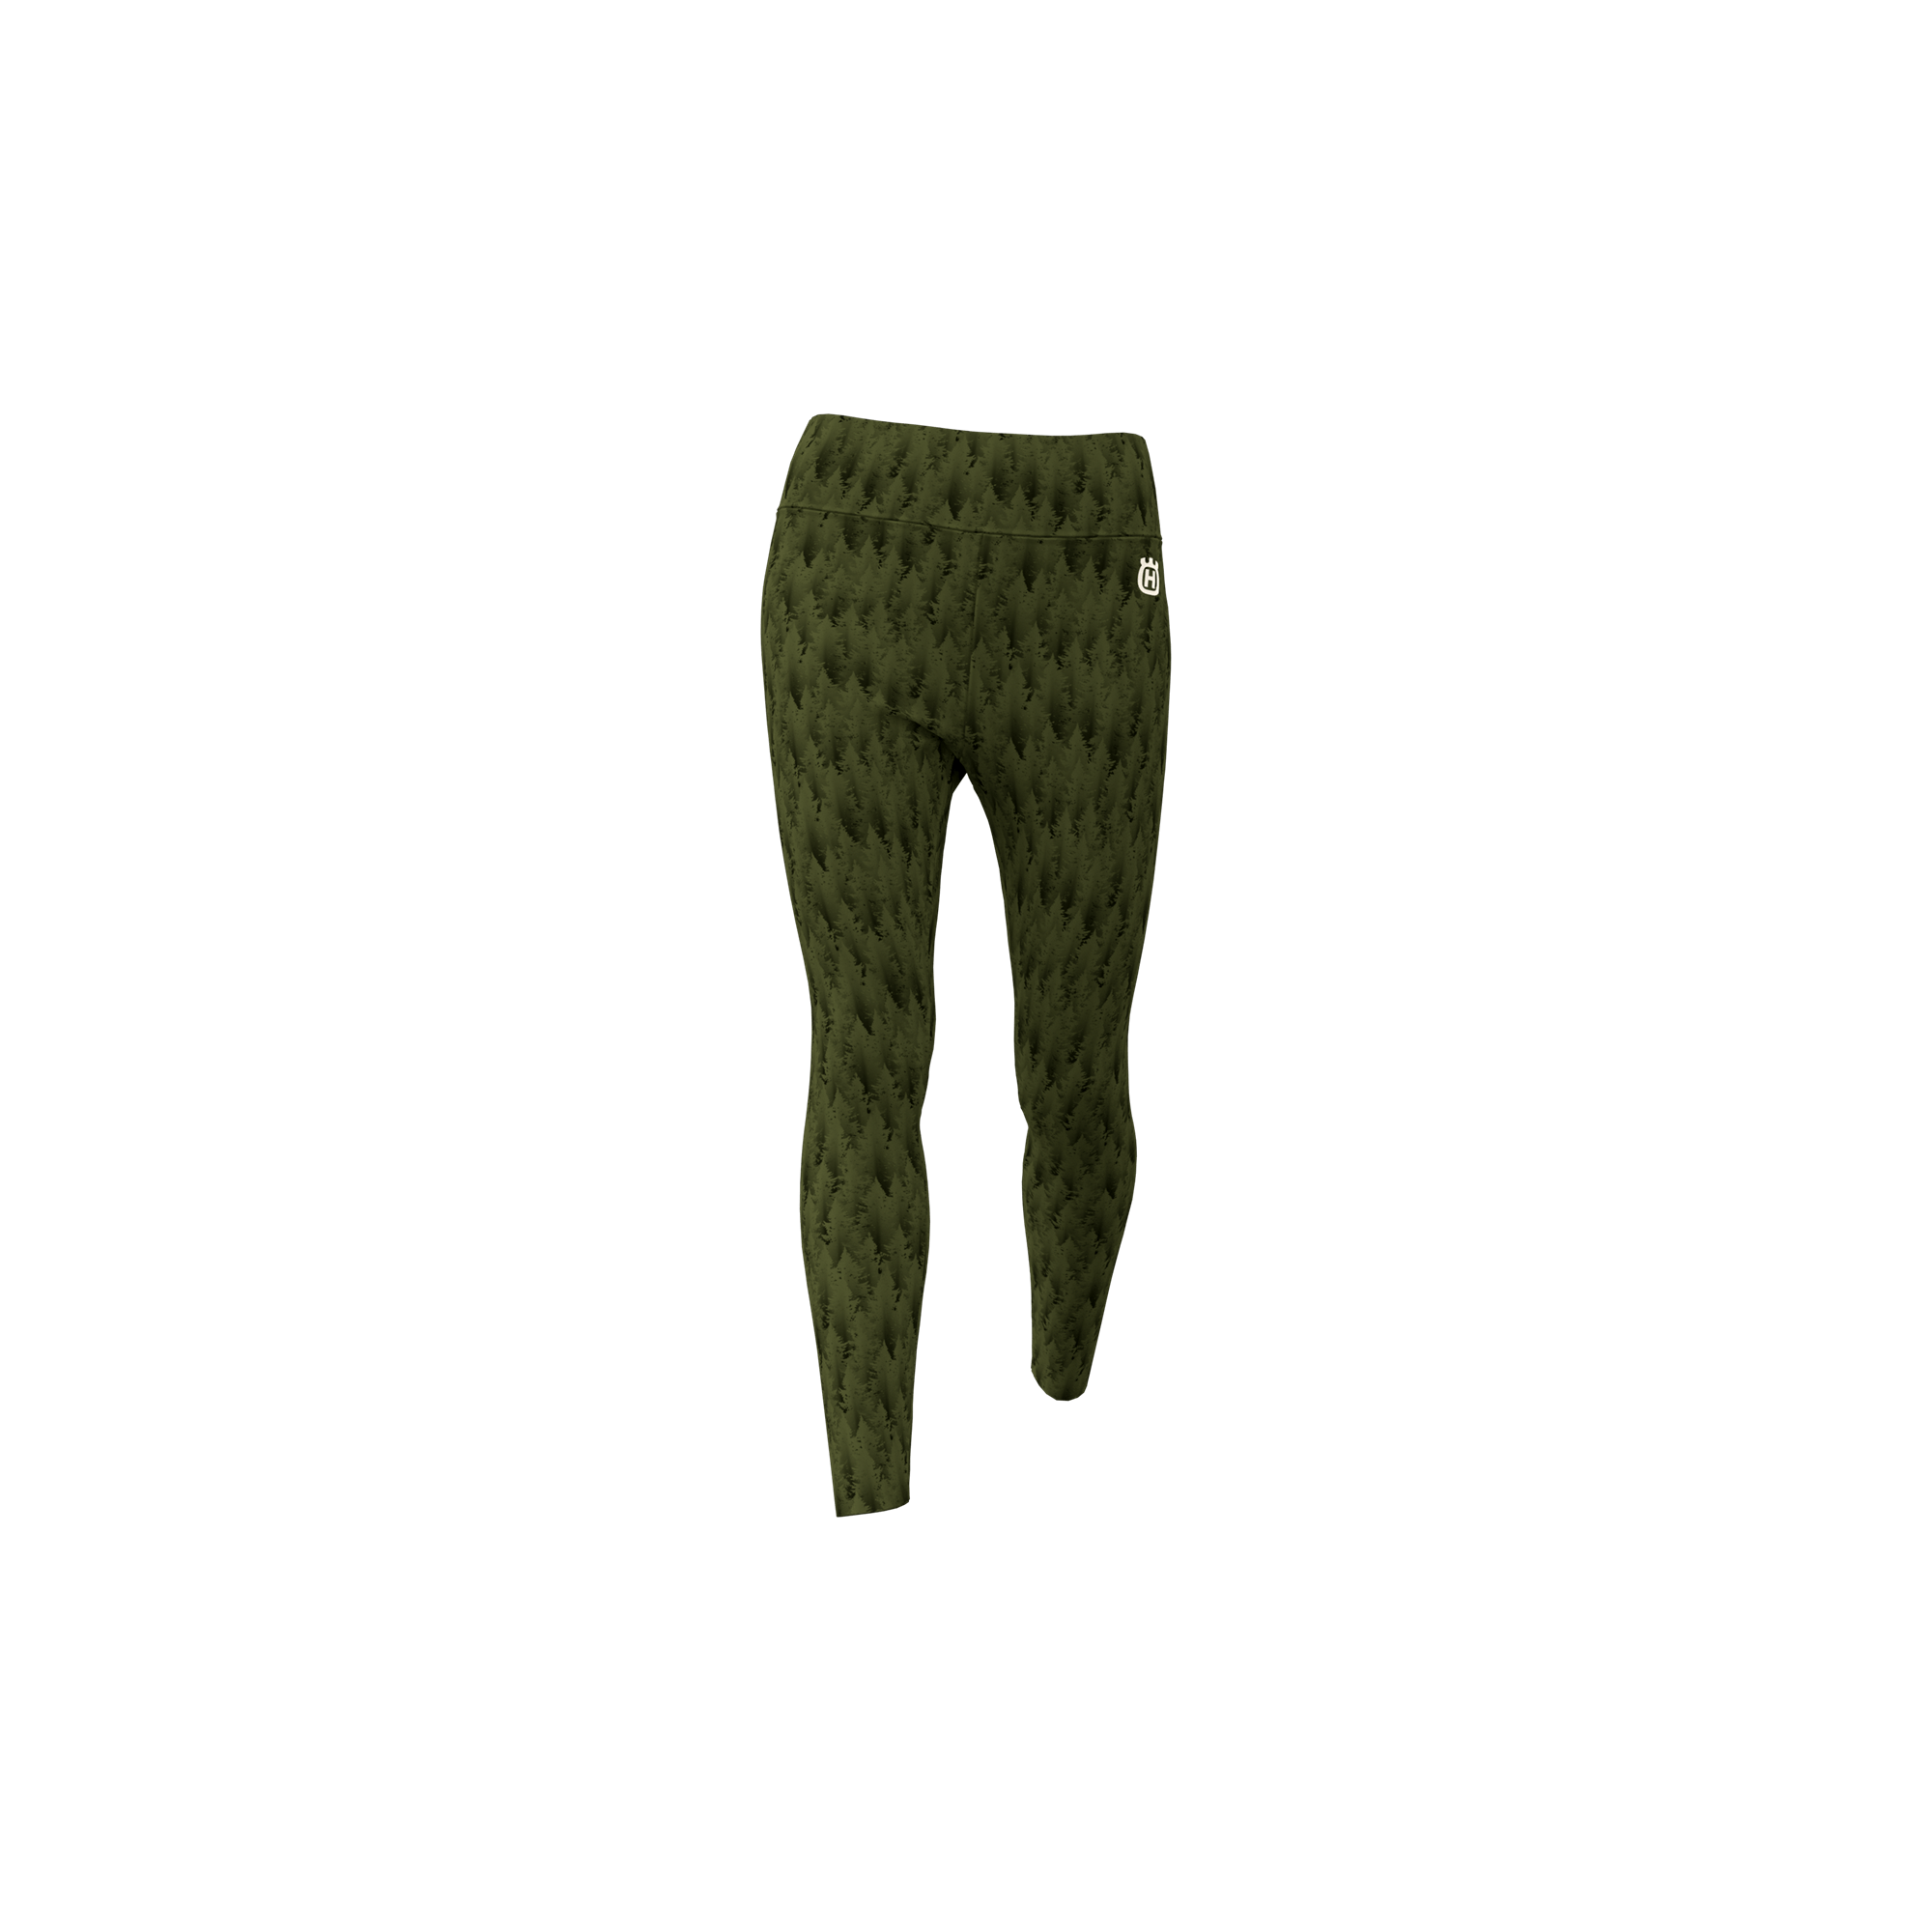 Image for GRÖN Printed Leggings from HusqvarnaB2C